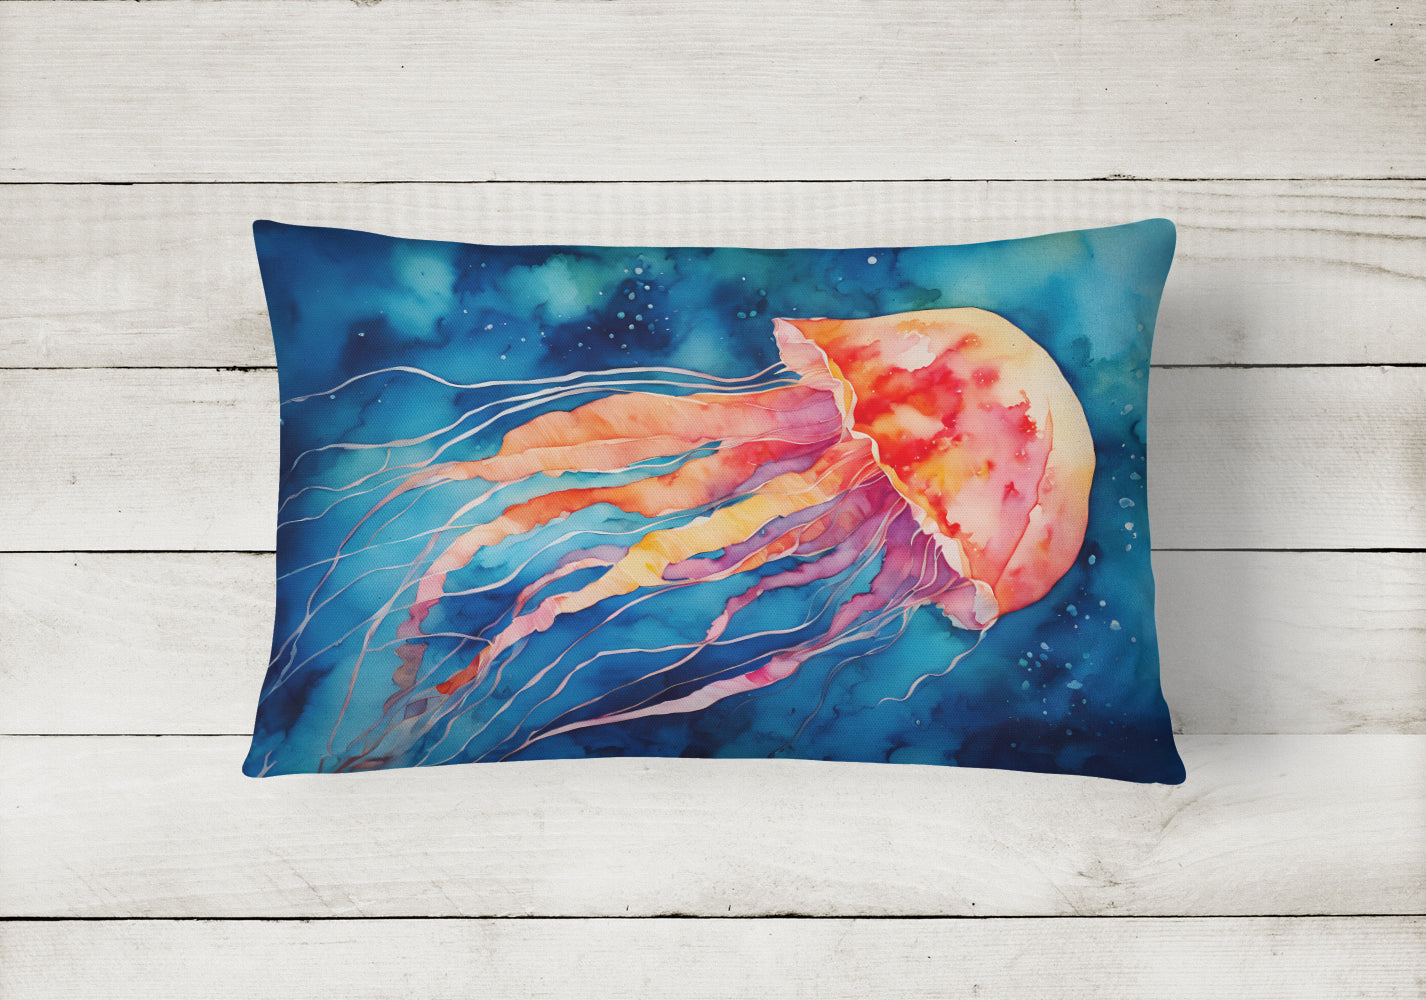 Buy this Jellyfish Throw Pillow